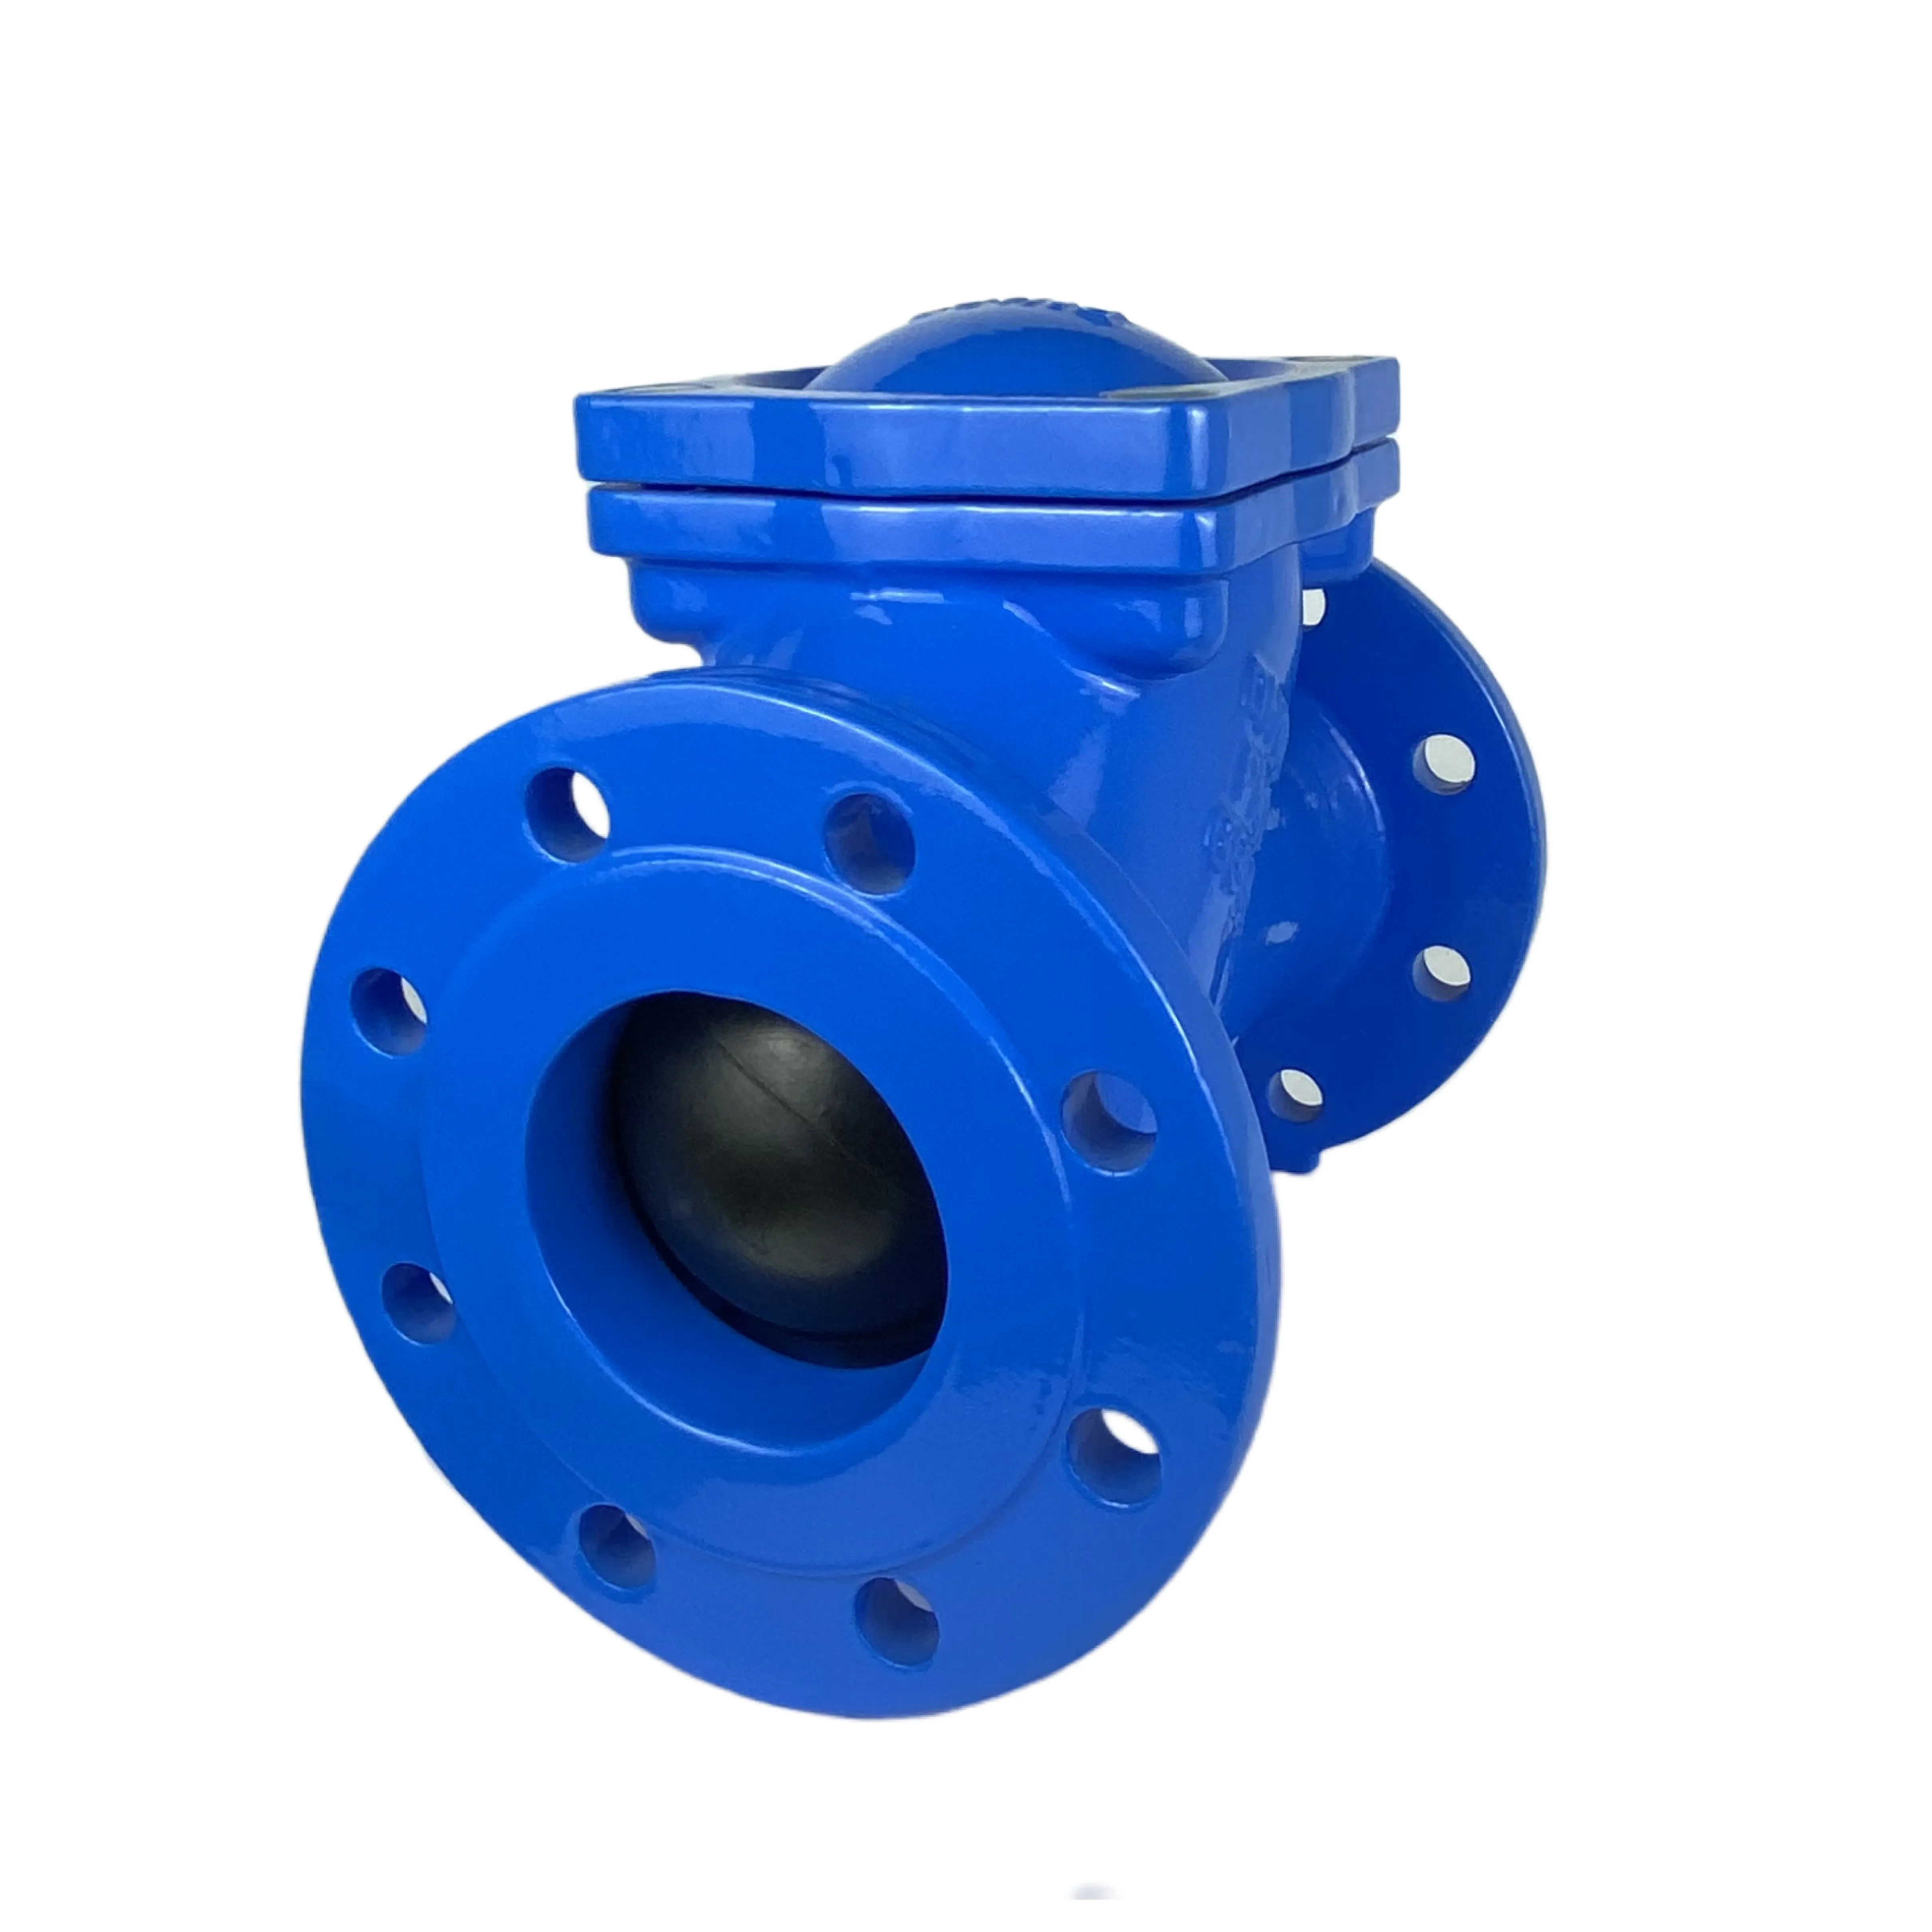 Harga pabrik Ductile bola besi tipe check valve bola cek katup untuk industri pompa DIN3202-F6